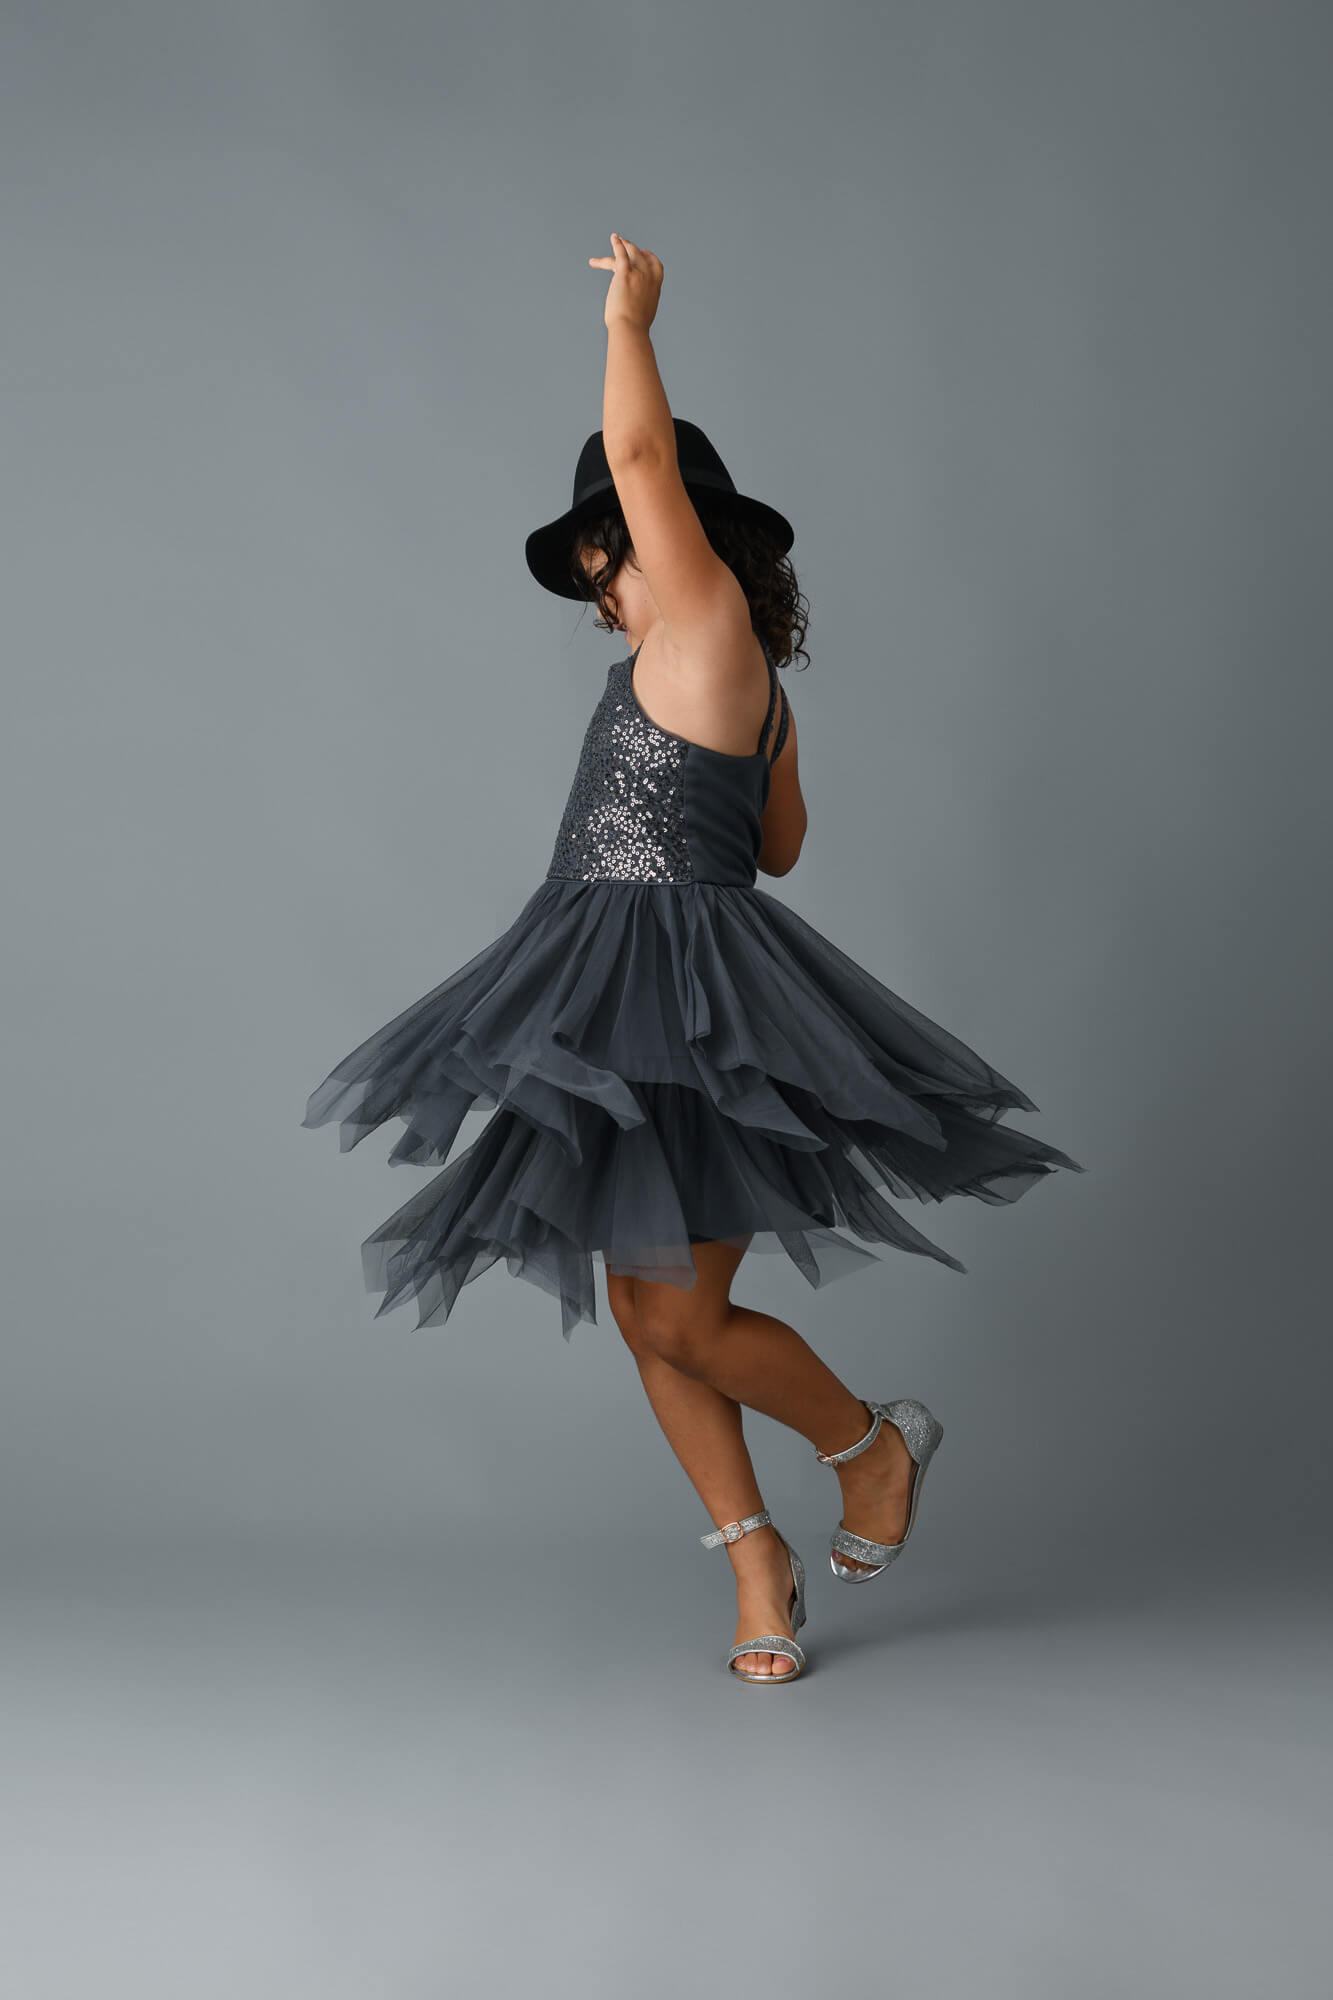 Dancing Queen 1 - Refined Style | Lisa Maco Photography, Washington, DC